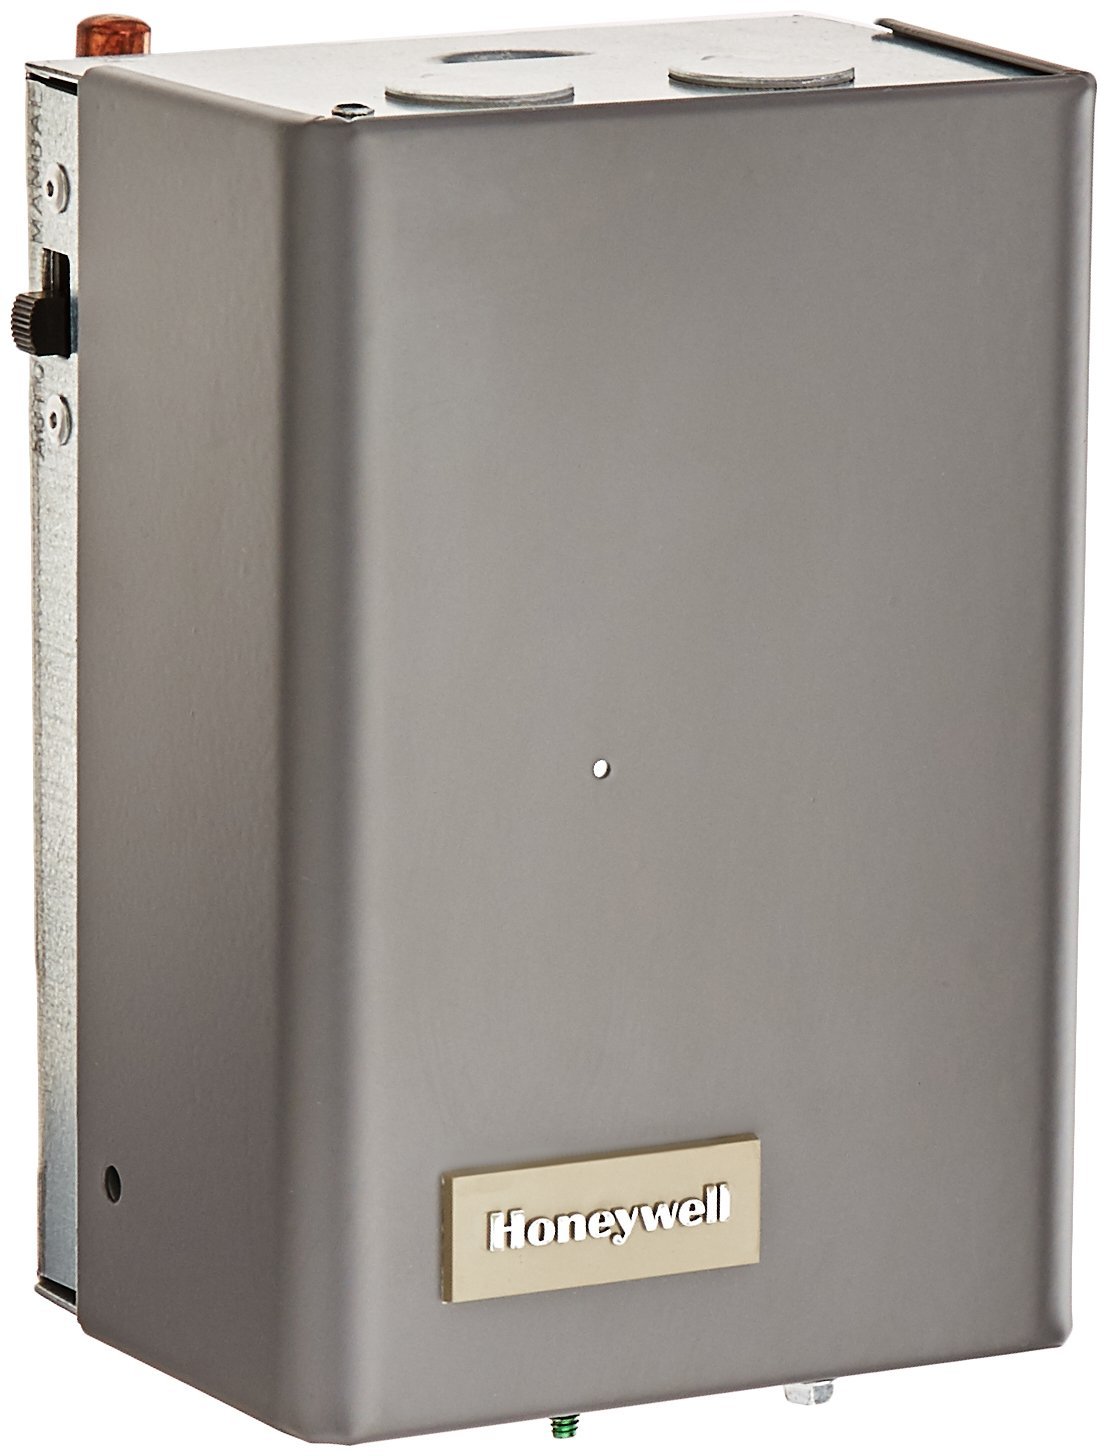 honeywell s8610u in place of honeywell s8600m wiring diagram